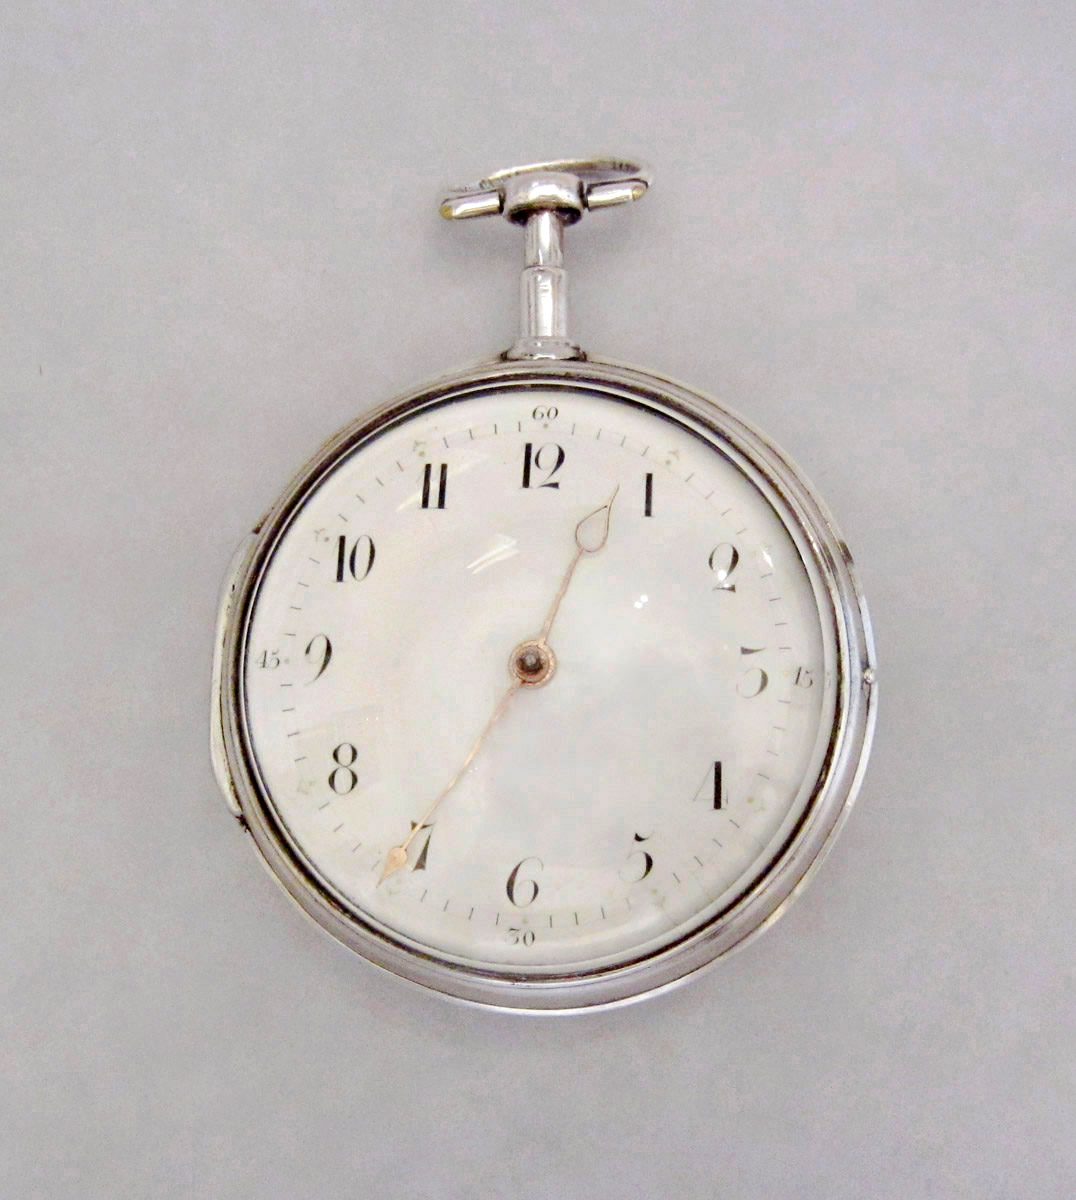 Clocks, Watches, and Scientific Instruments - Watch